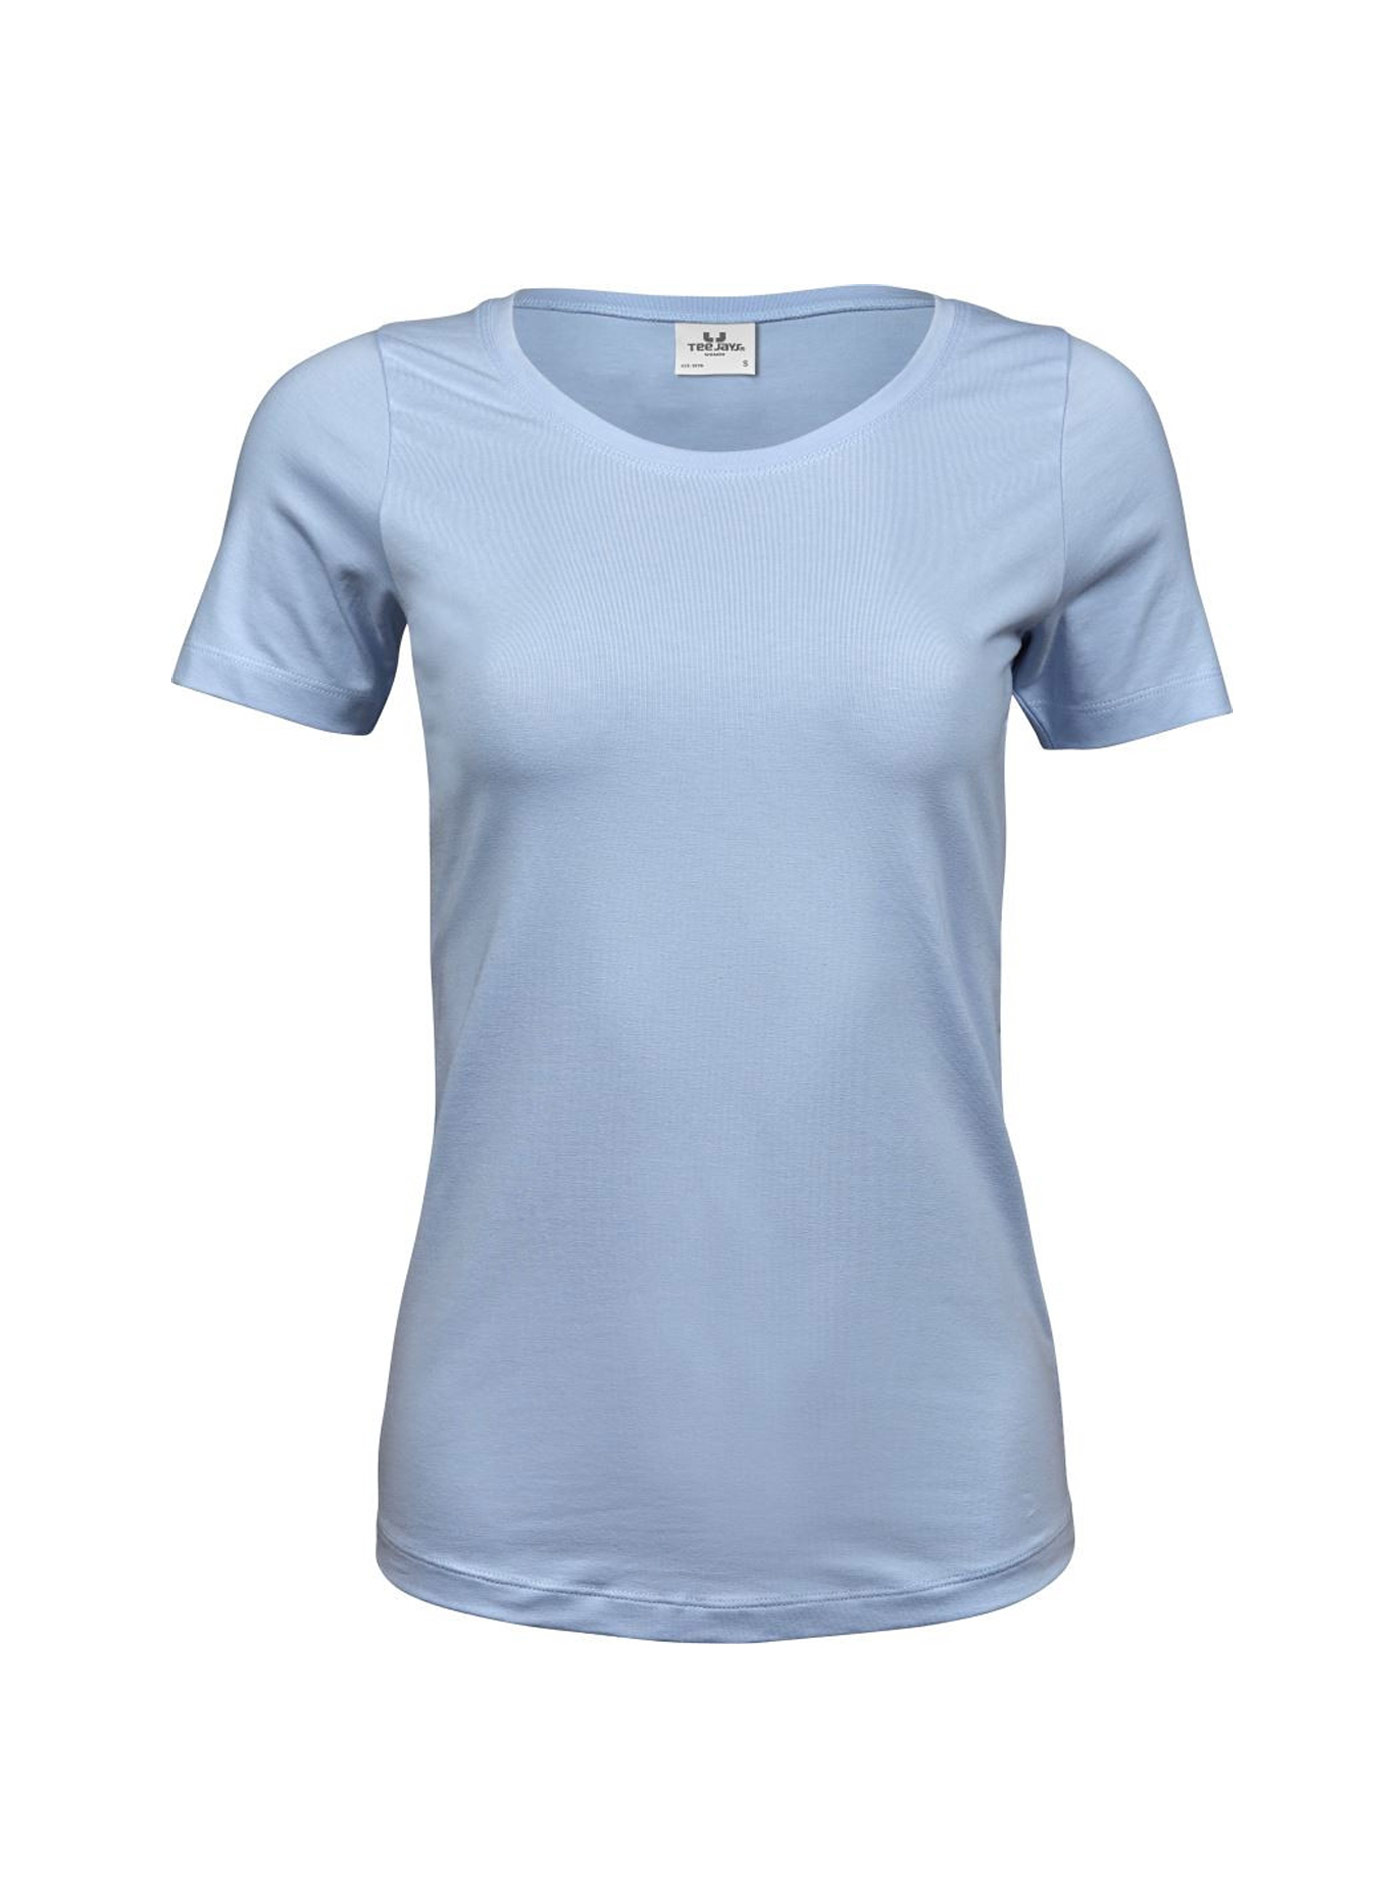 Dámské Stretch Tee tričko Tee Jays - světle modrá XL